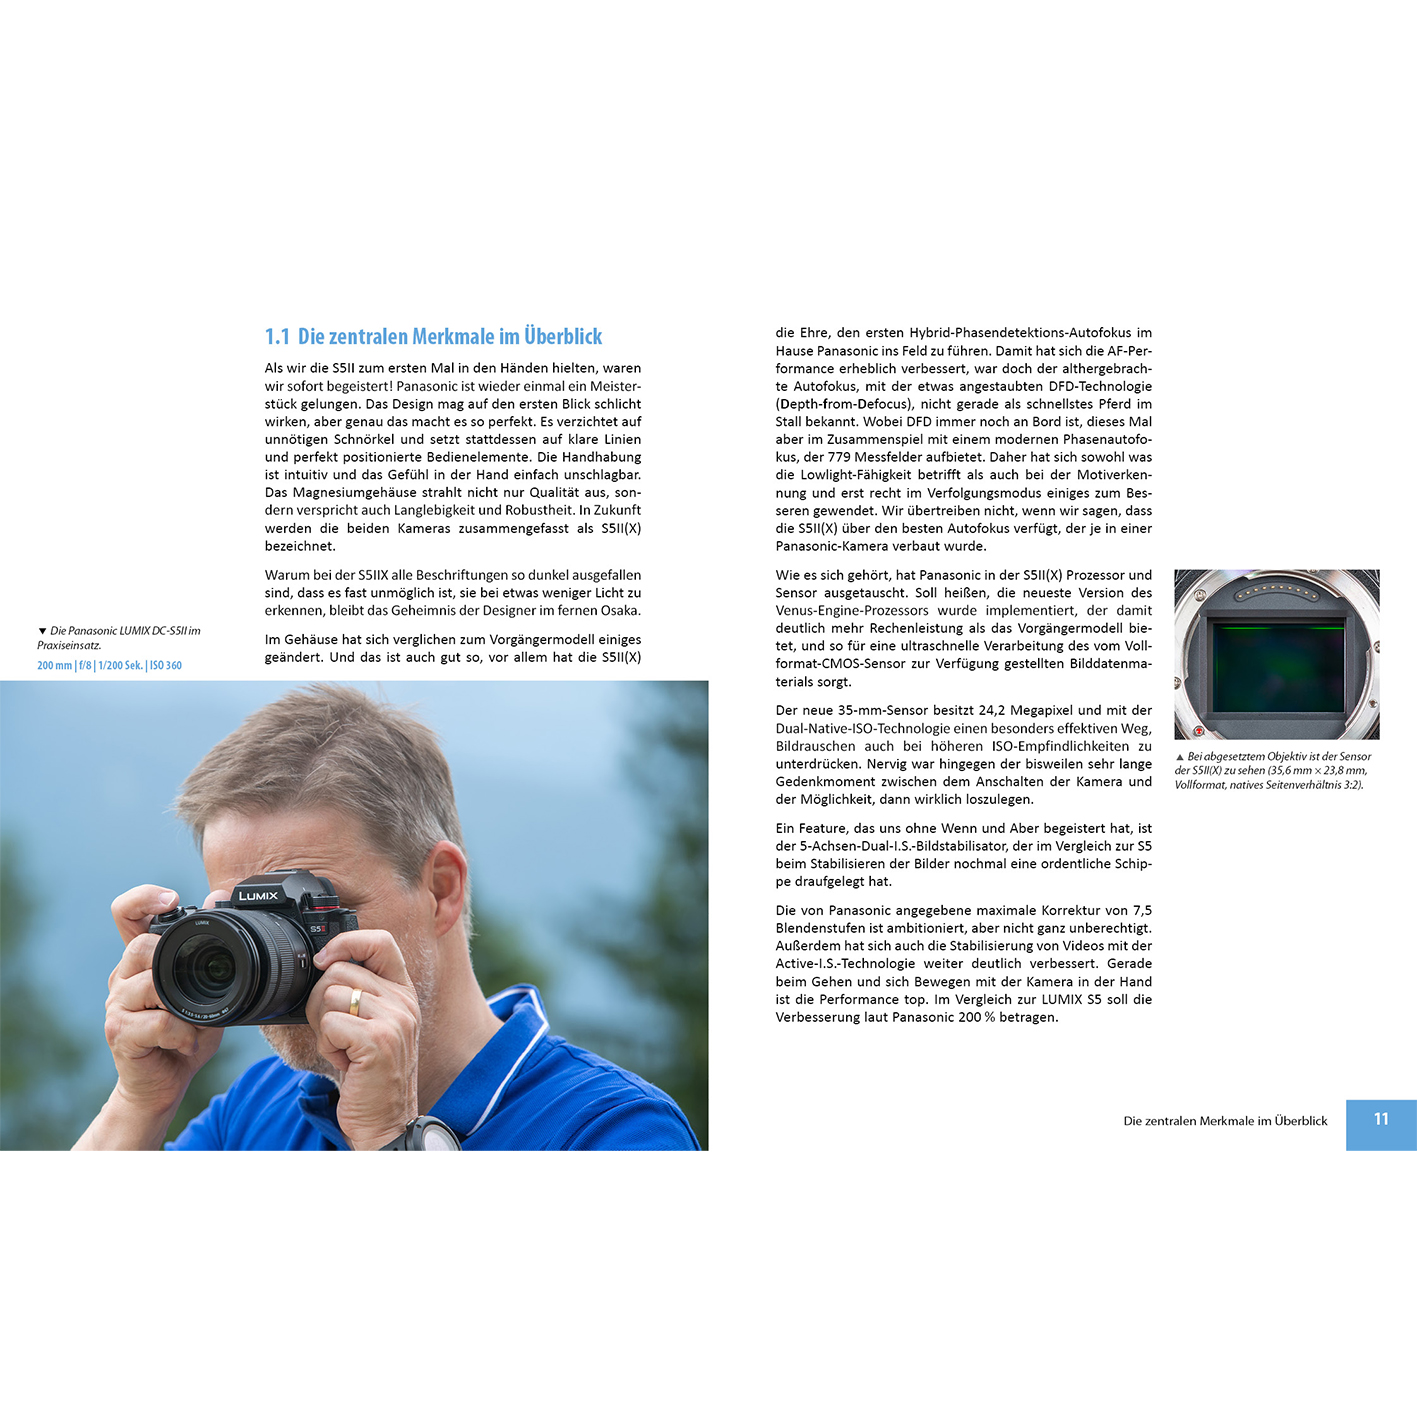 Panasonic Kamera / Praxisbuch umfangreiche Ihrer S5II X Das - zu LUMIX DC-S5II